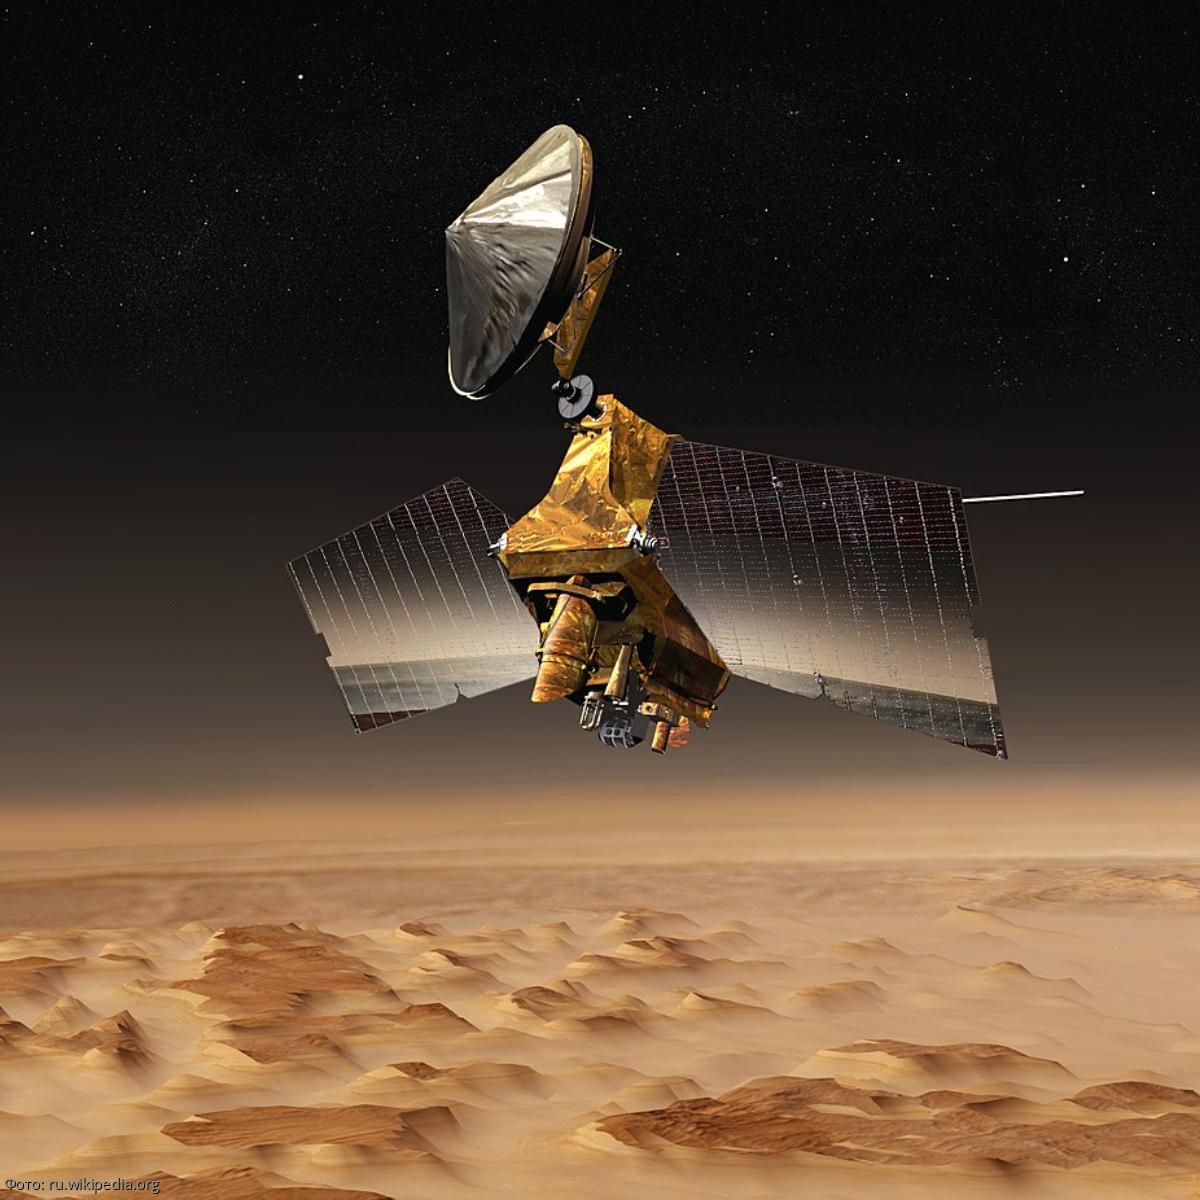 Орбитальный аппарат Mars Reconnaissance Orbiter обнаружил странные круглые дюны на Марсе